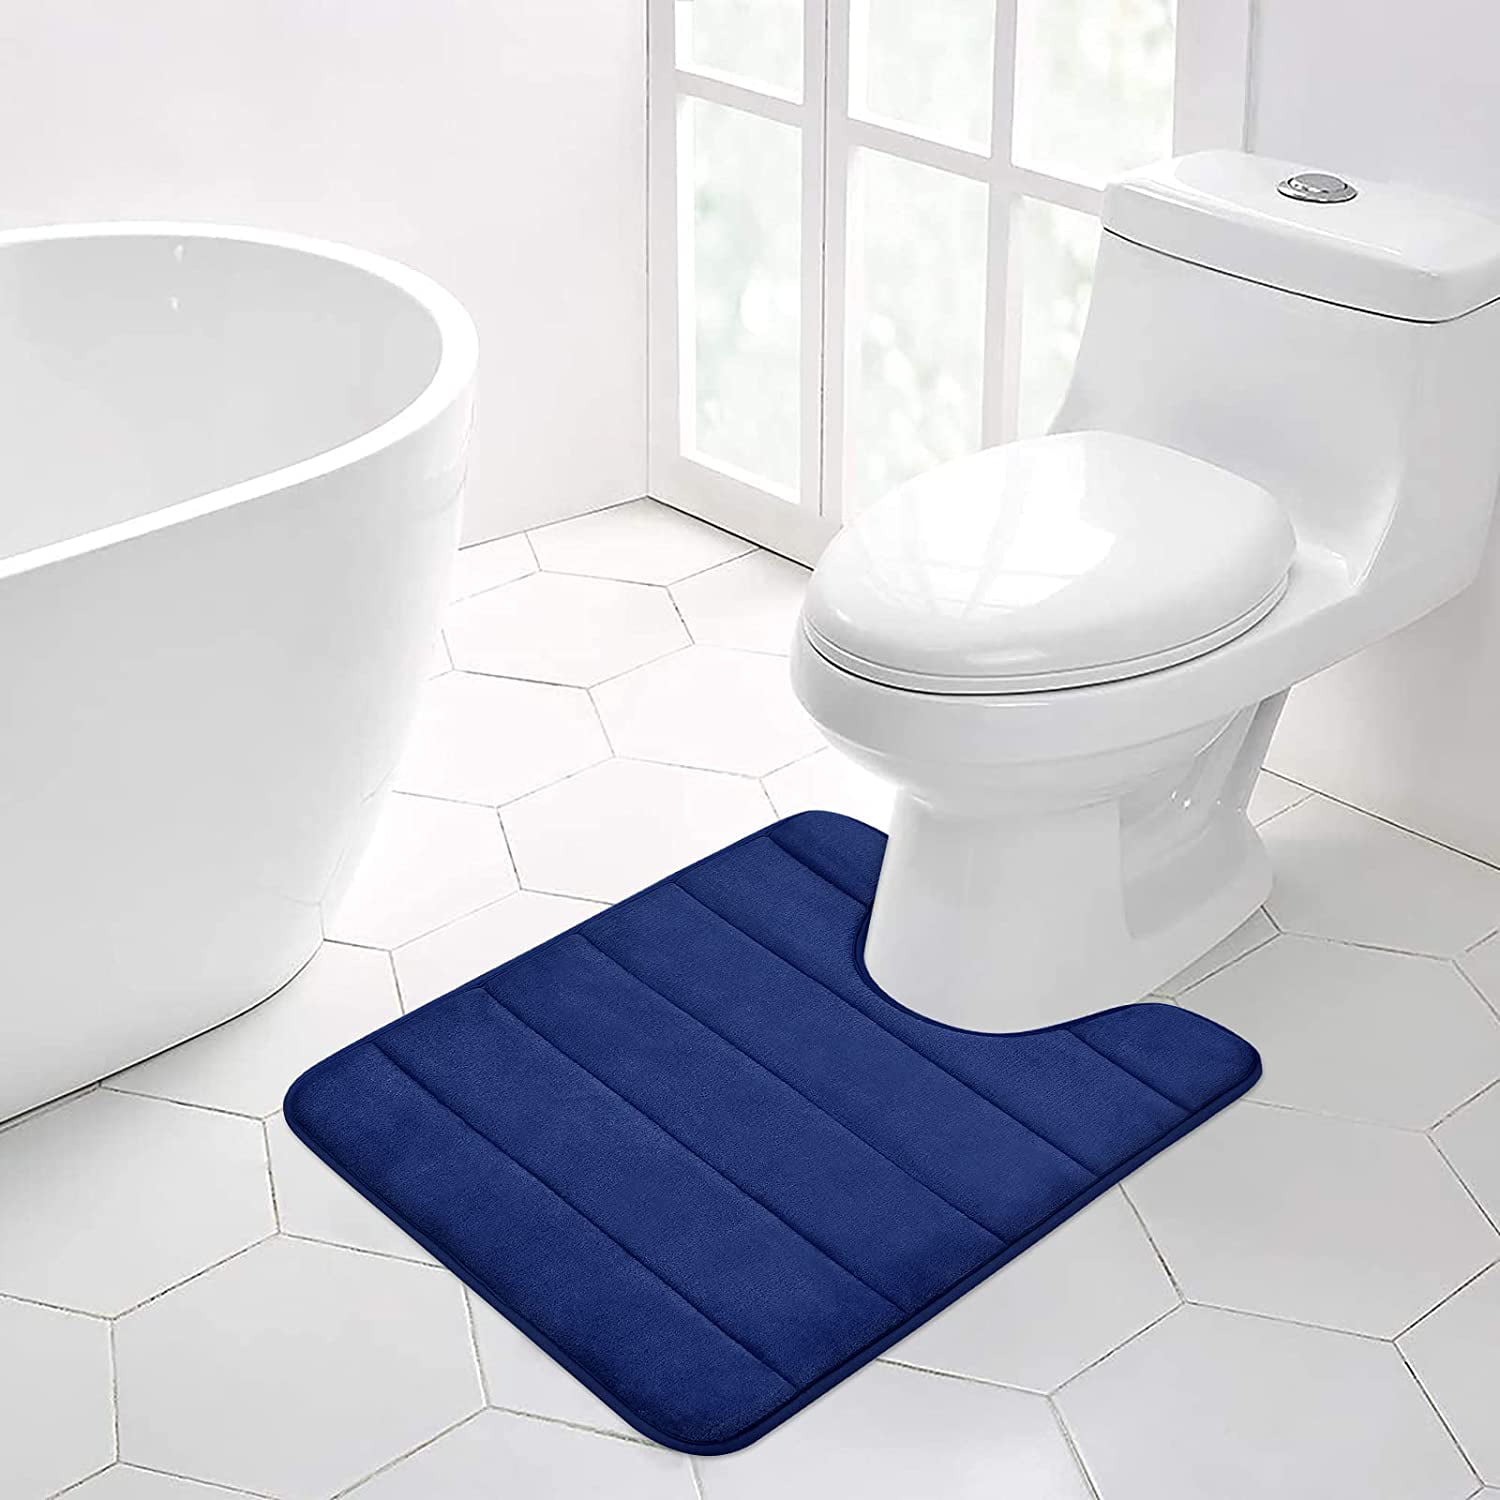 Details about   Mainstays Memory Foam 3 Piece Bathroom Rug Set Navy Blue 